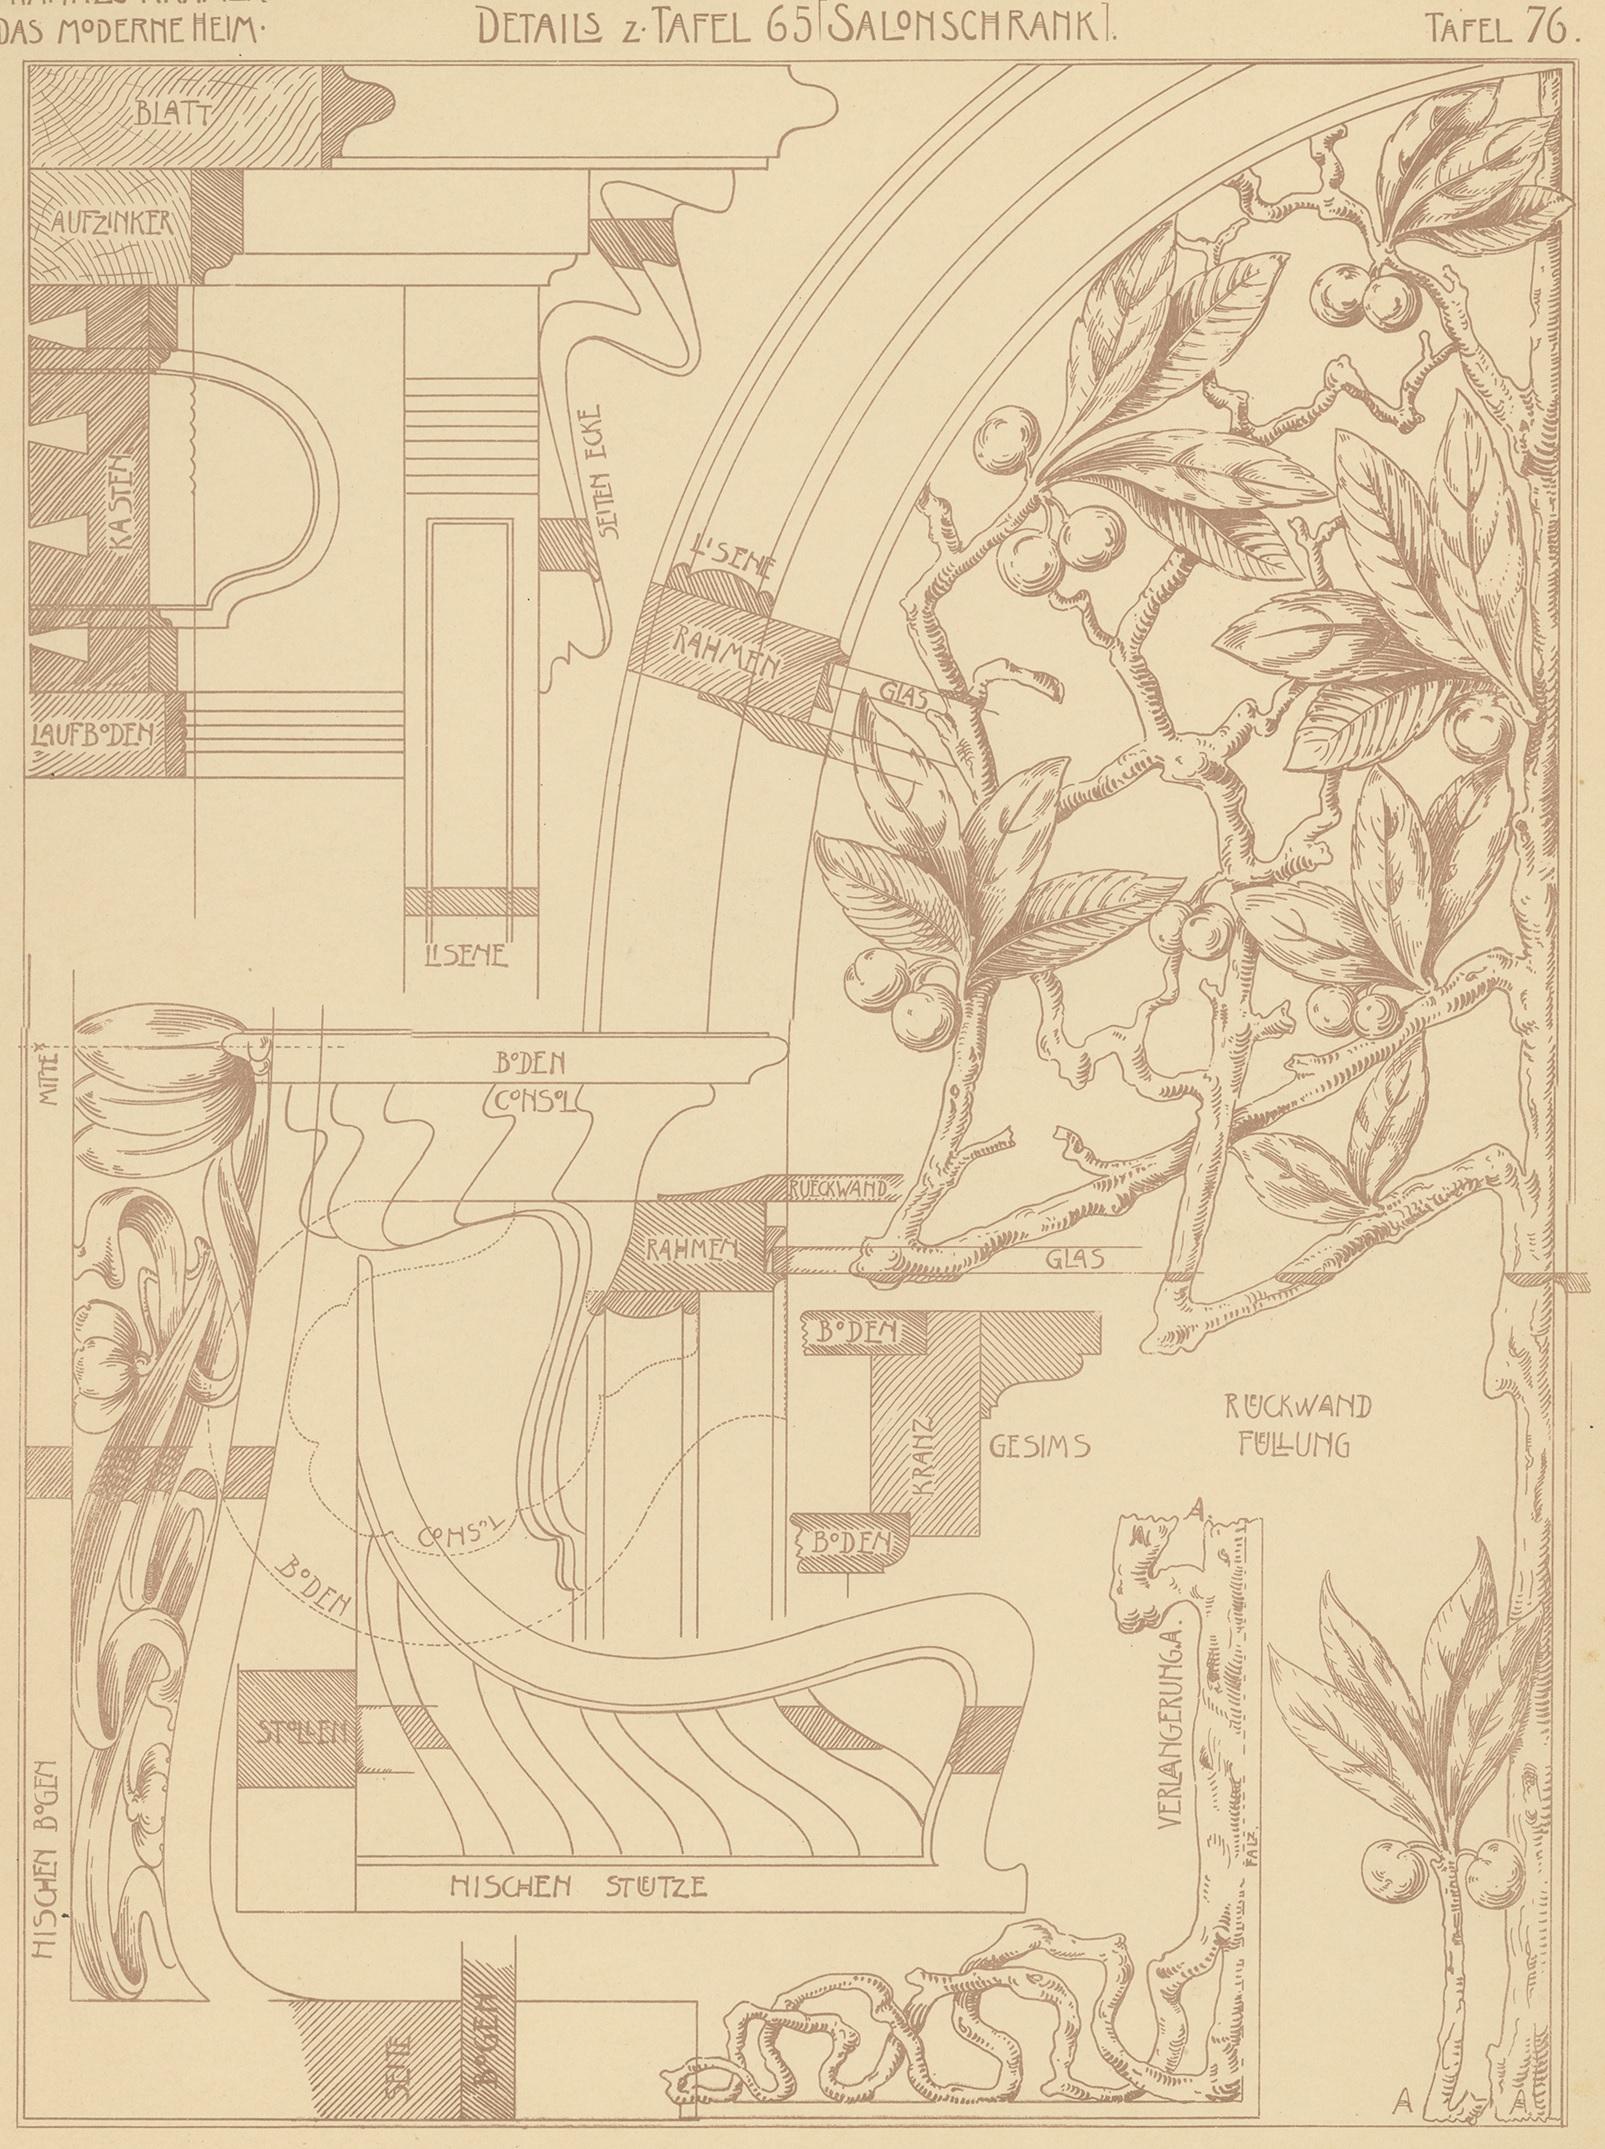 Antique print titled 'Details z. Salonschrank'. Lithograph of furniture details. This print originates from 'Det Moderna Hemmet' by Johannes Kramer. Published by Ferdinand Hey'l, circa 1910.